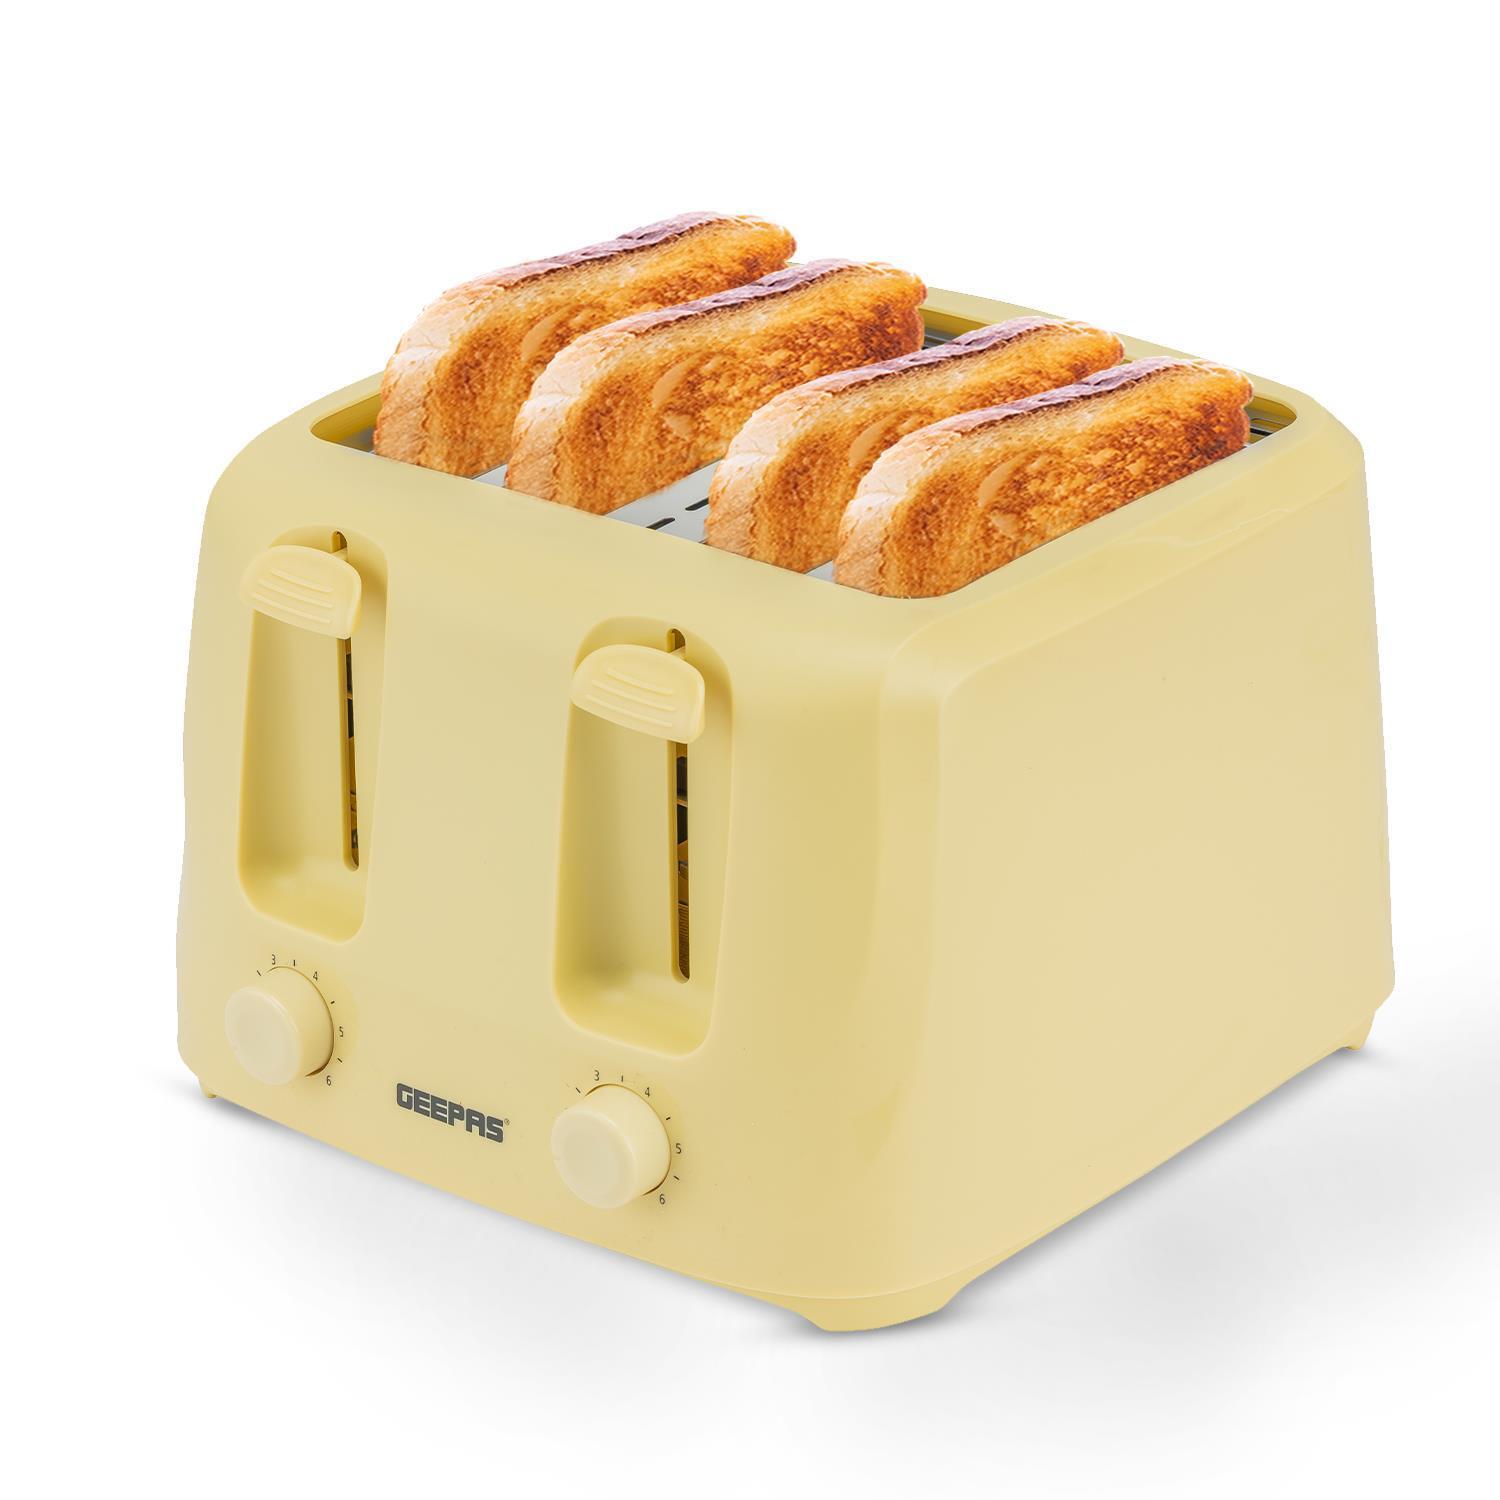 Plastic Beige 1.7L & 4-Slice Kettle and Toaster Set